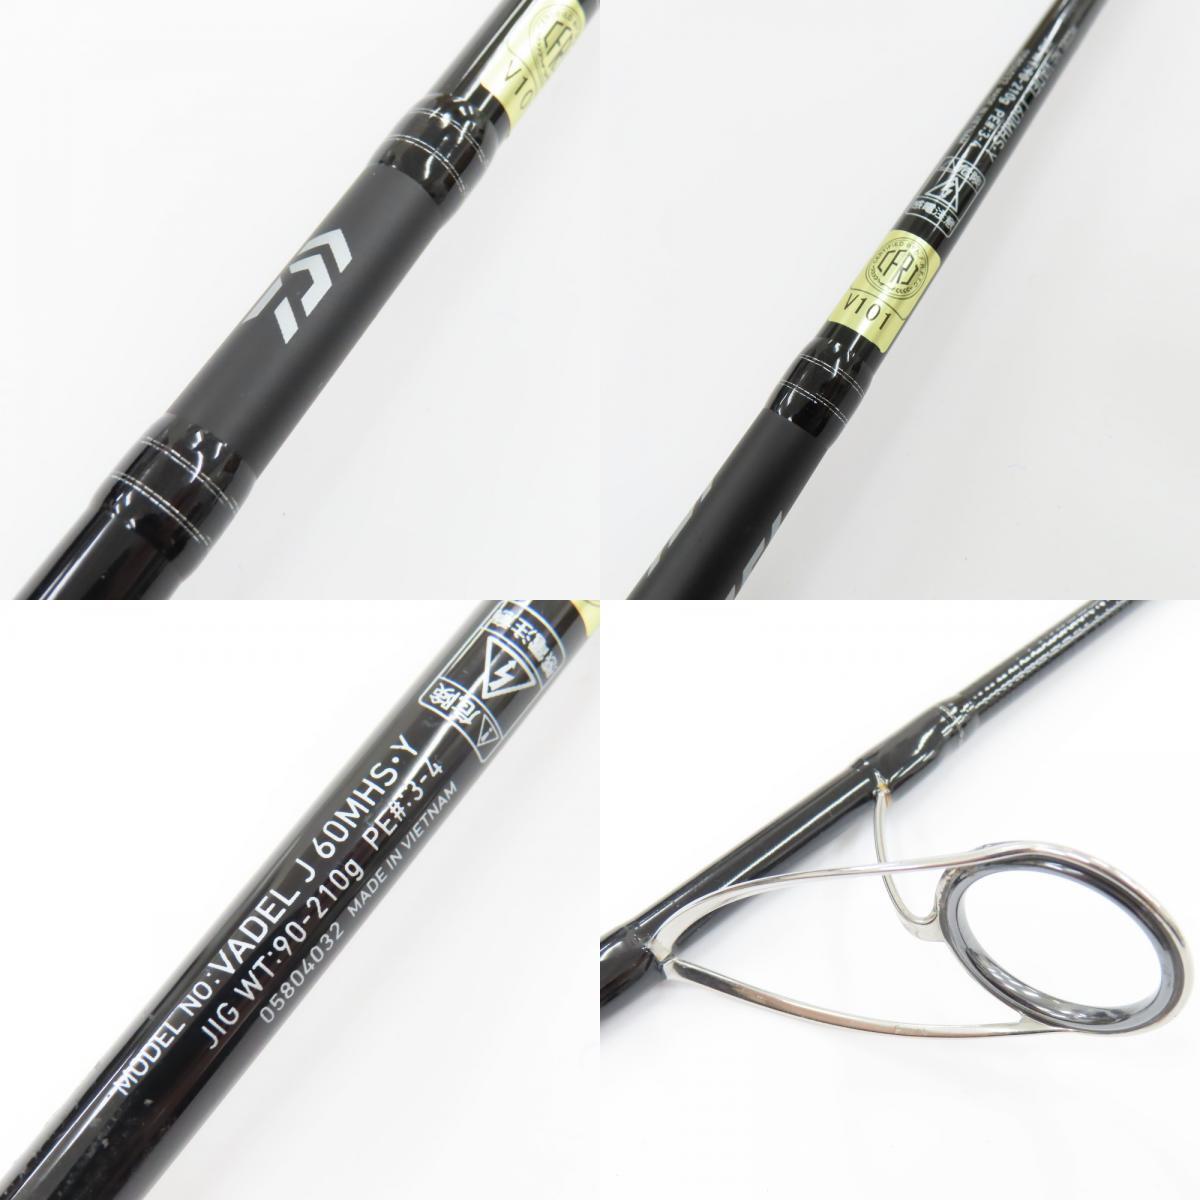 41557*1 иен старт *Daiwa Daiwa превосходный товар va Dell VADEL J60MHS jigging спиннинг удочка рыбалка рыбалка спорт 